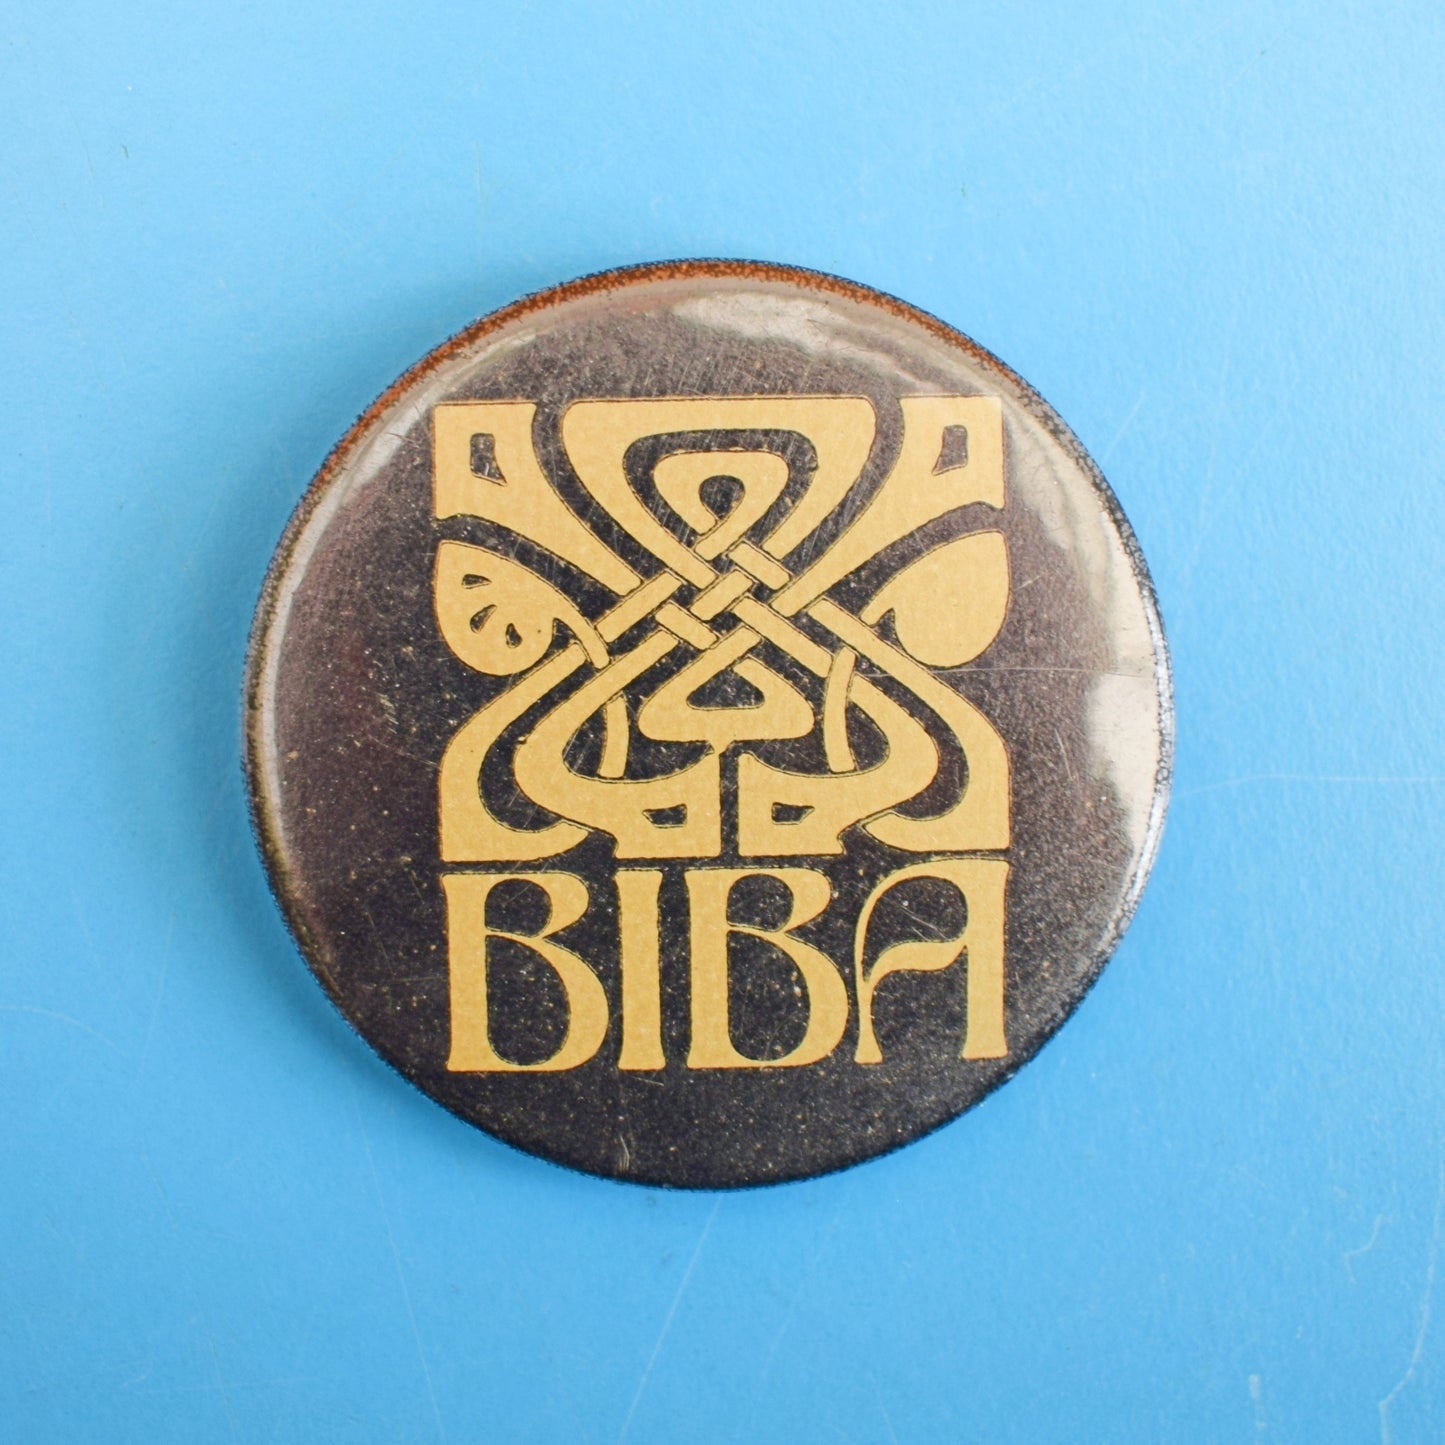 Vintage 1970s Pin  Badge - Biba Design